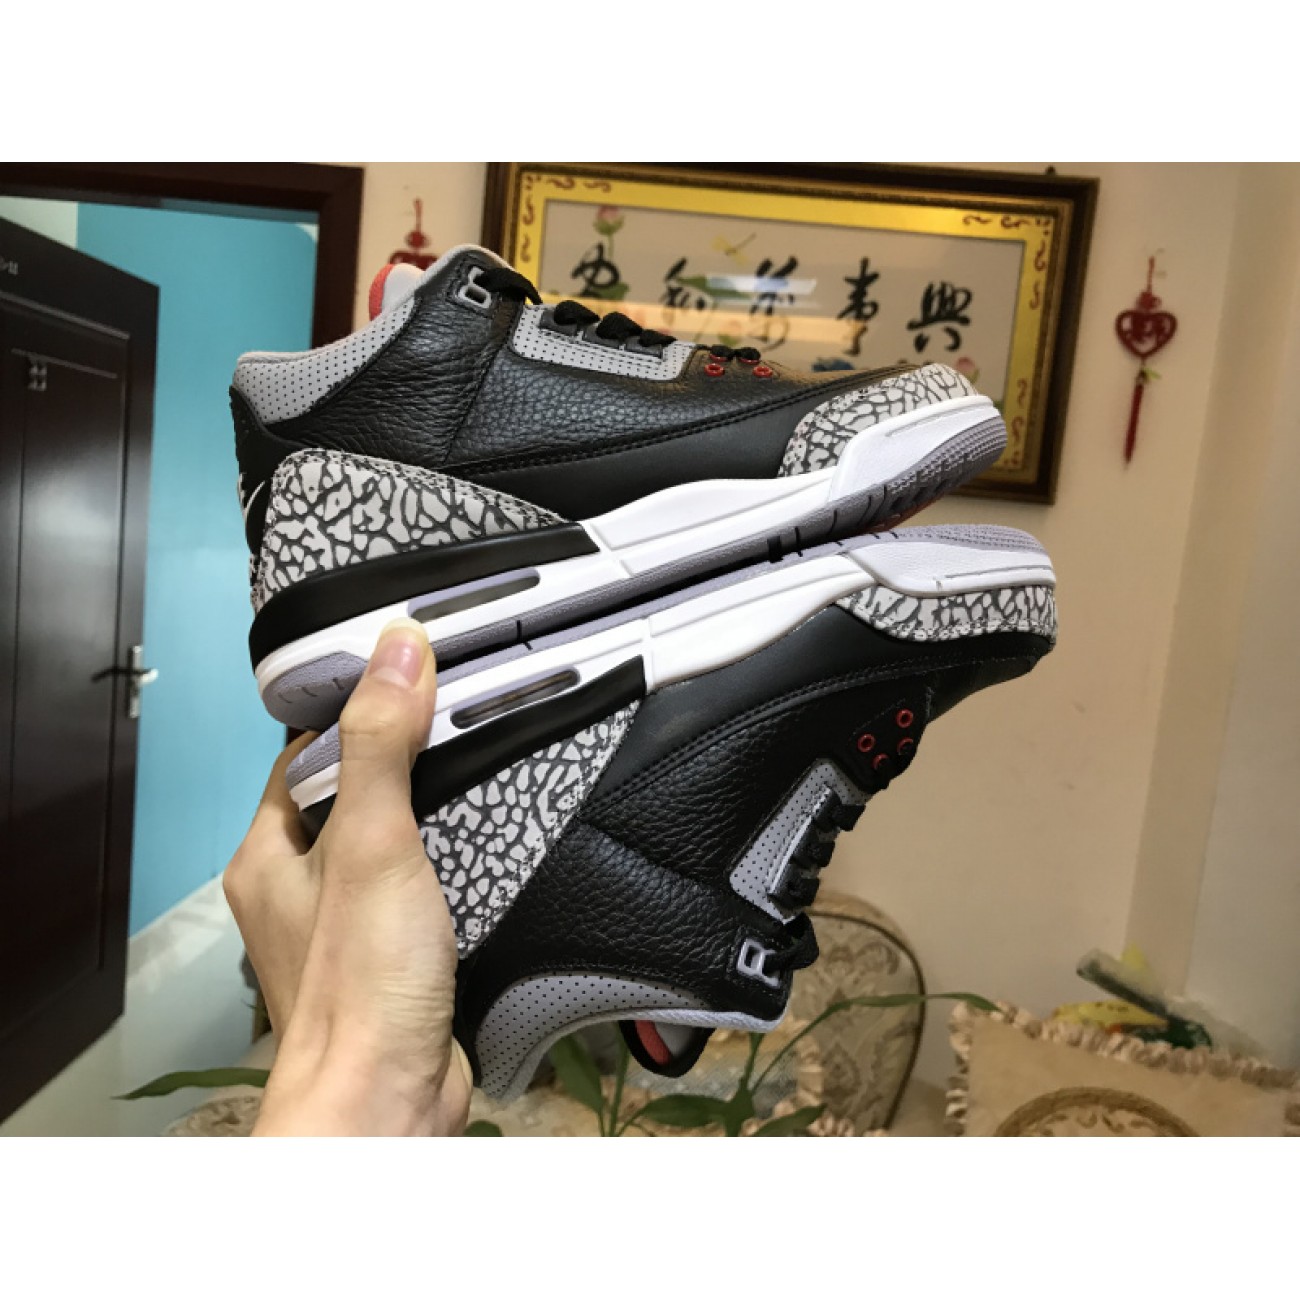 Air Jordan 3 GS "Black Cement" 854261-001